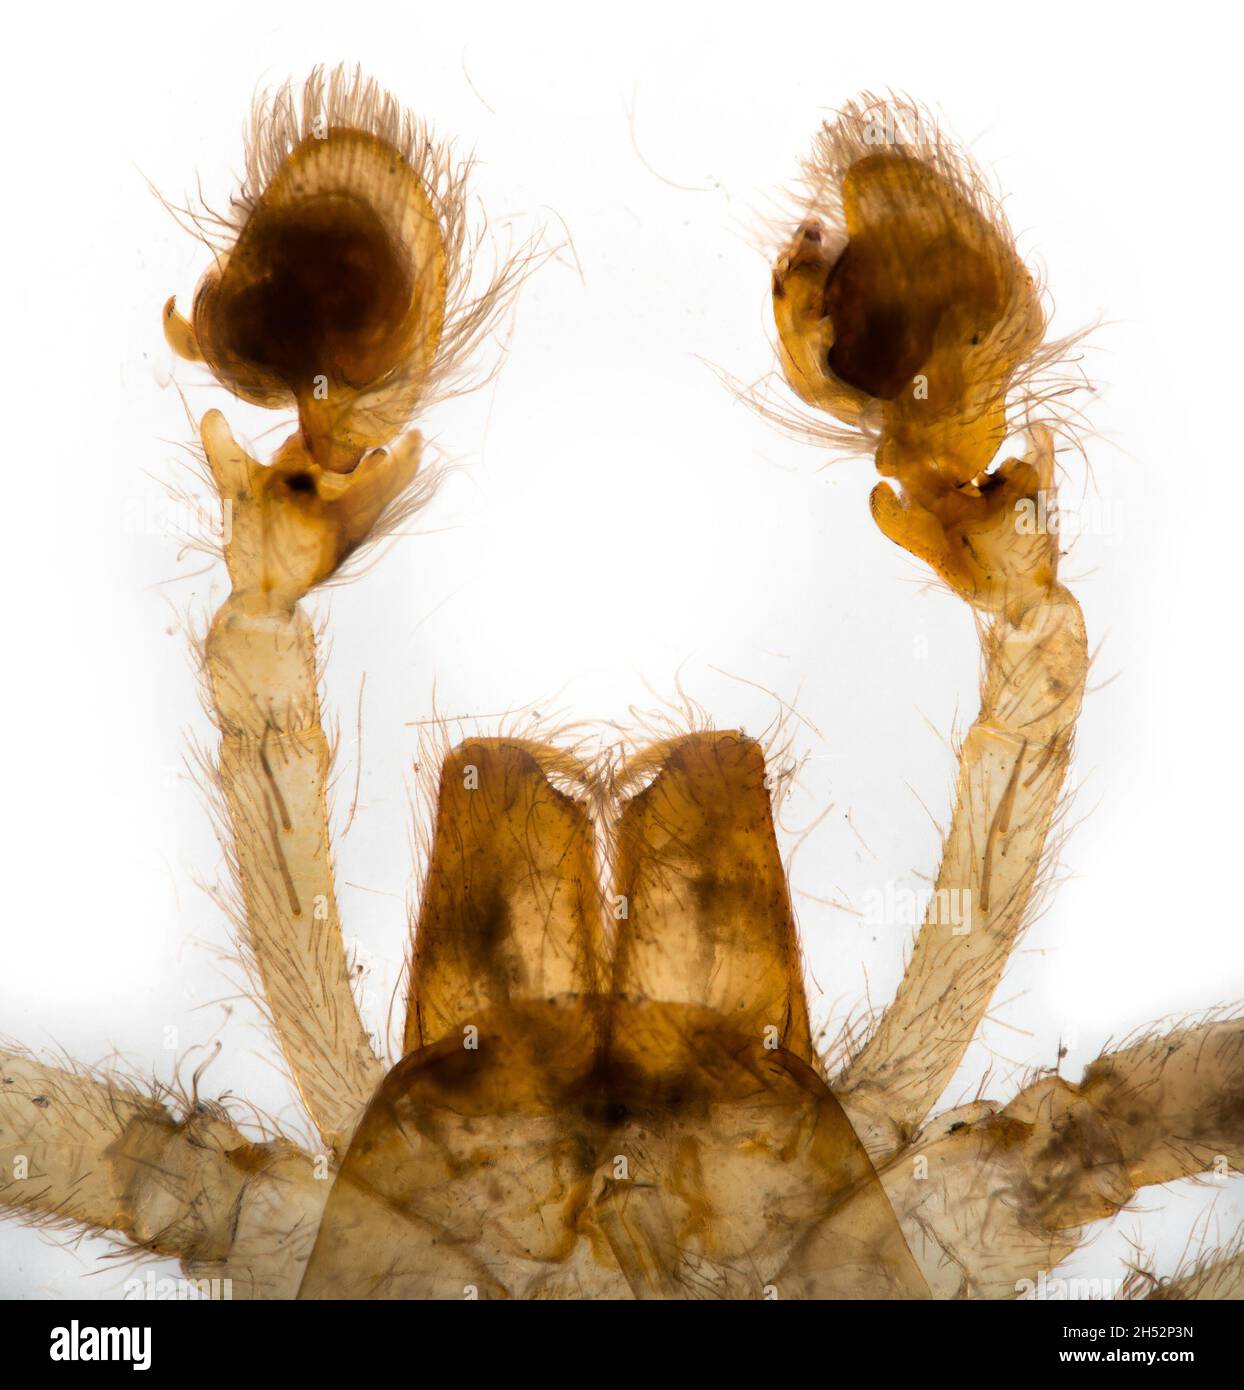 Amaurobius fenestralis, spider palps, brightfield photomicrograph Stock Photo